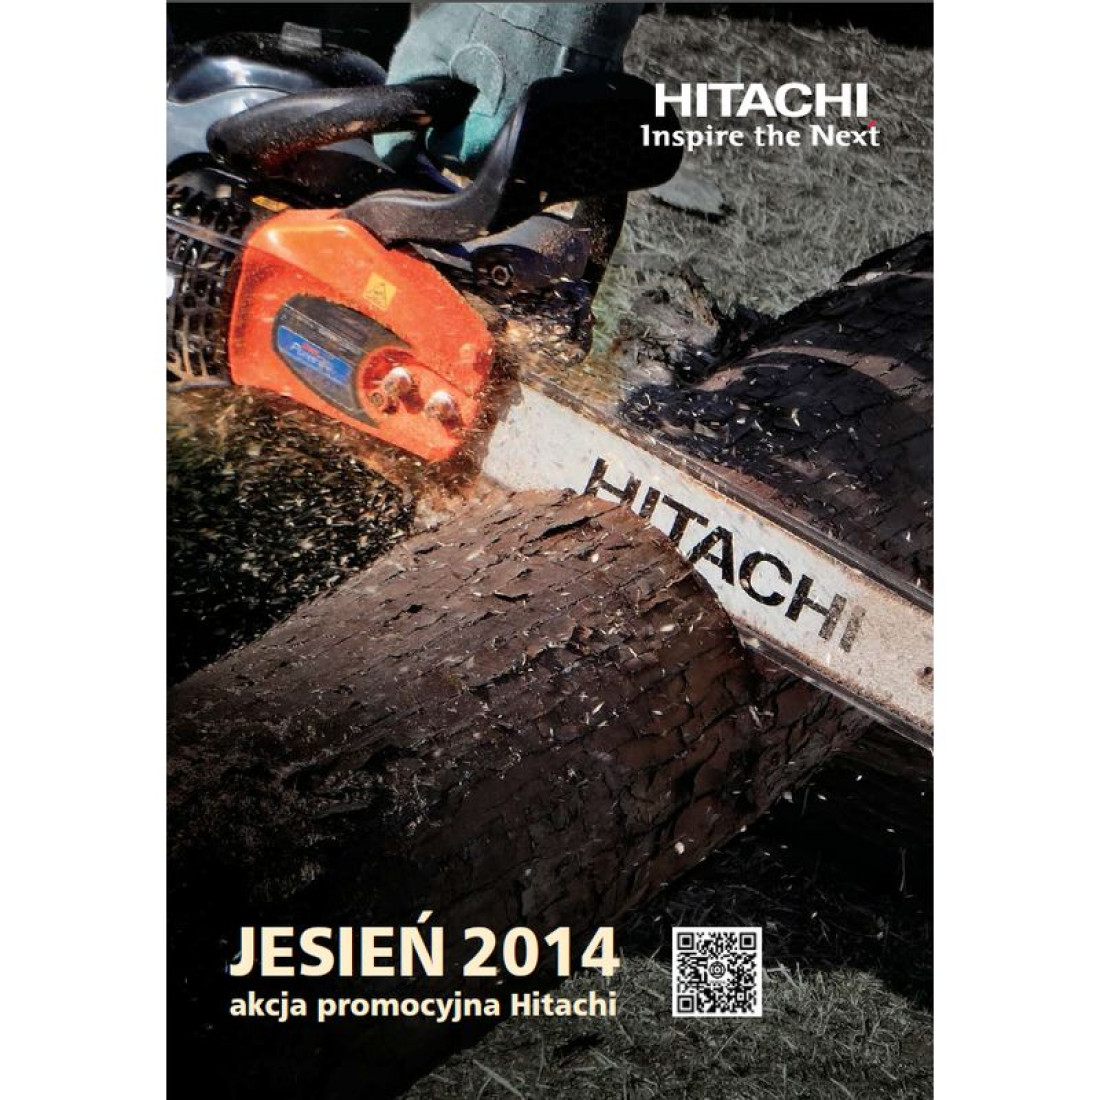 Jesienna promocja  Hitachi Power Tools Polska